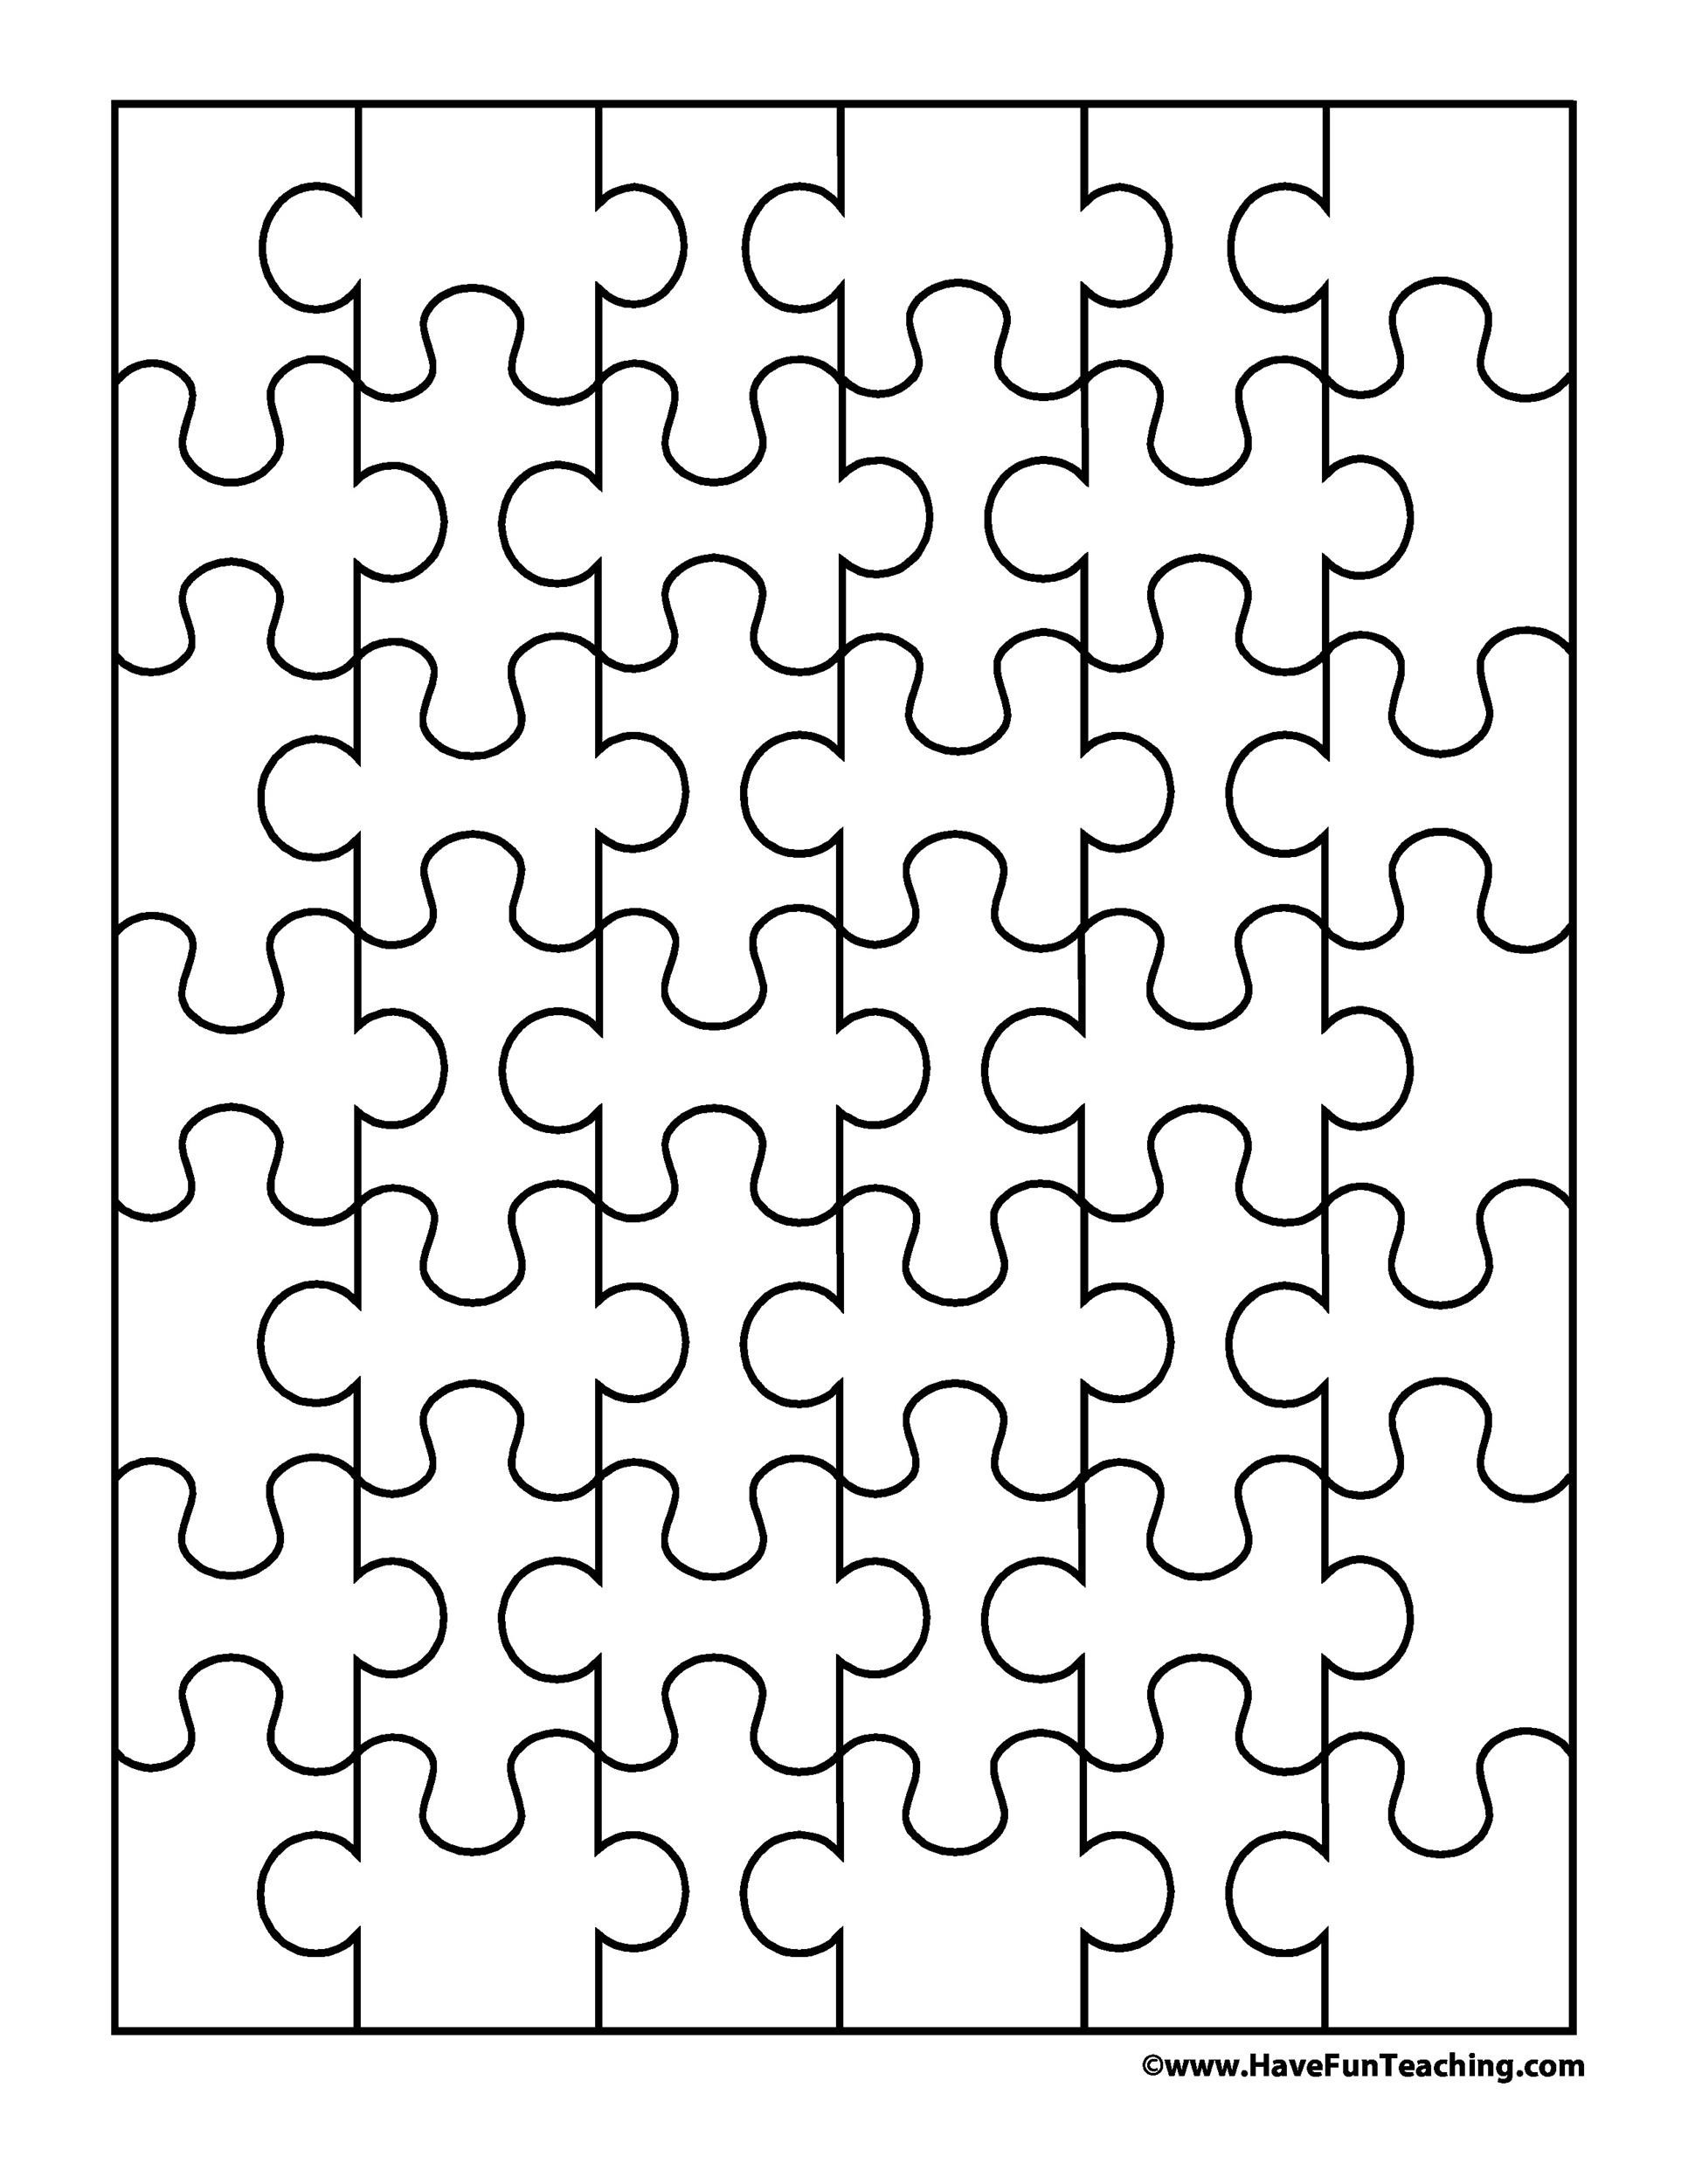 19 Printable Puzzle Piece Templates TemplateLab - Free Printable Blank Puzzle Pieces